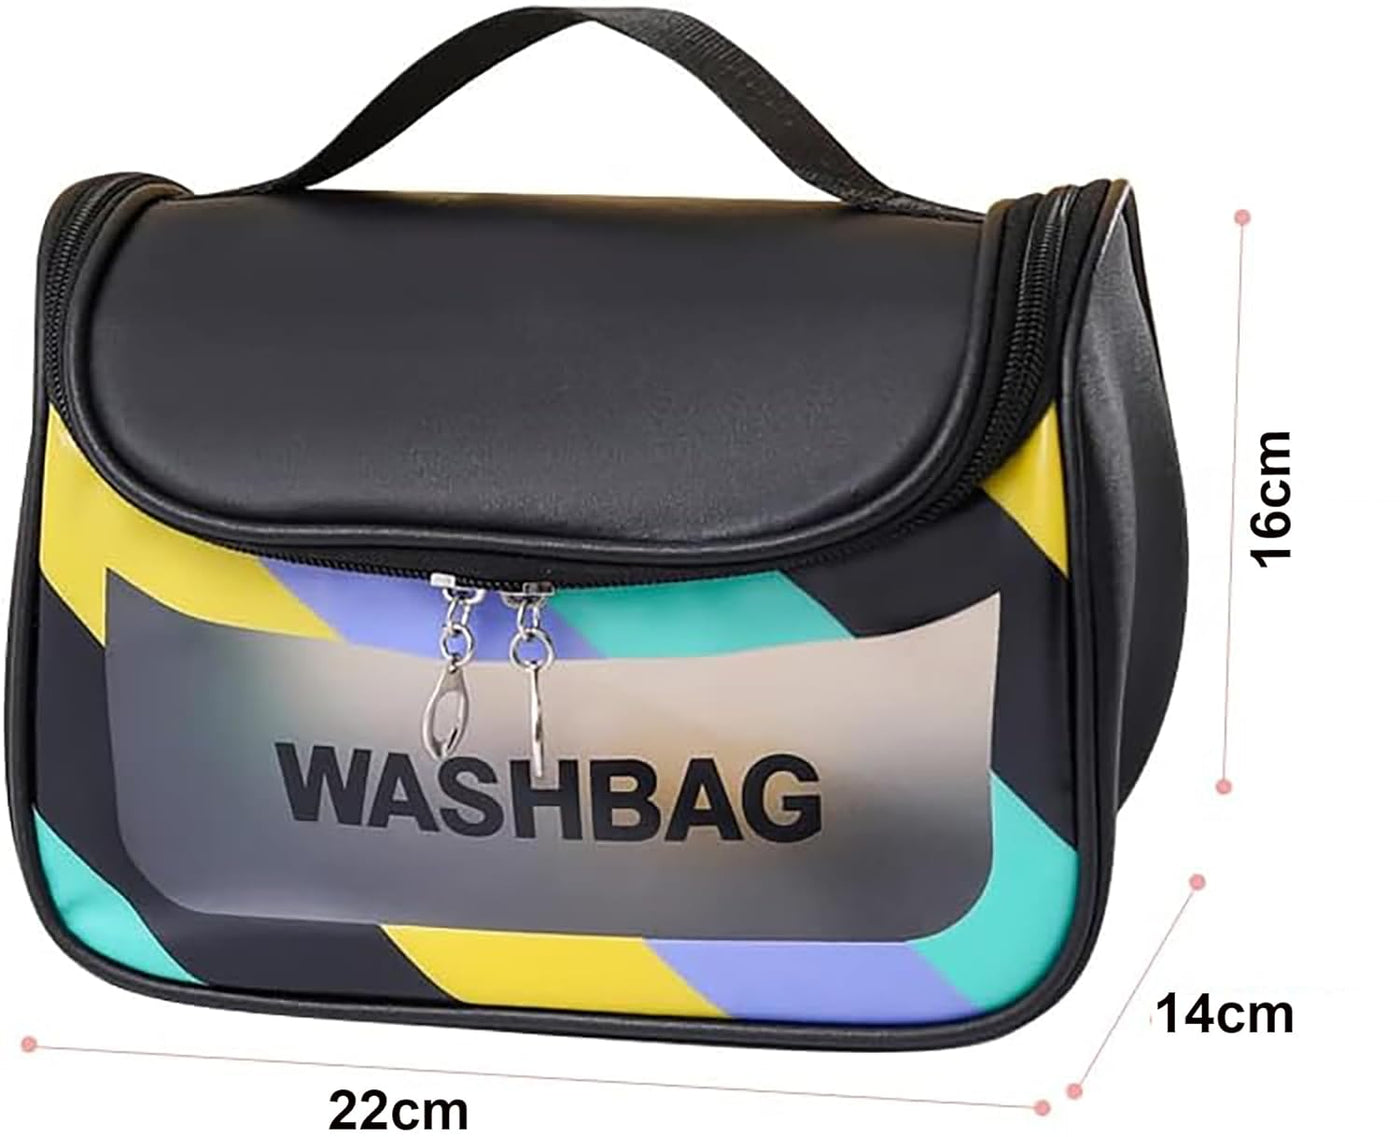 Travel Toiletry Bag for Women, Waterproof Cosmetic Wash Bag with Handy Handle - Black